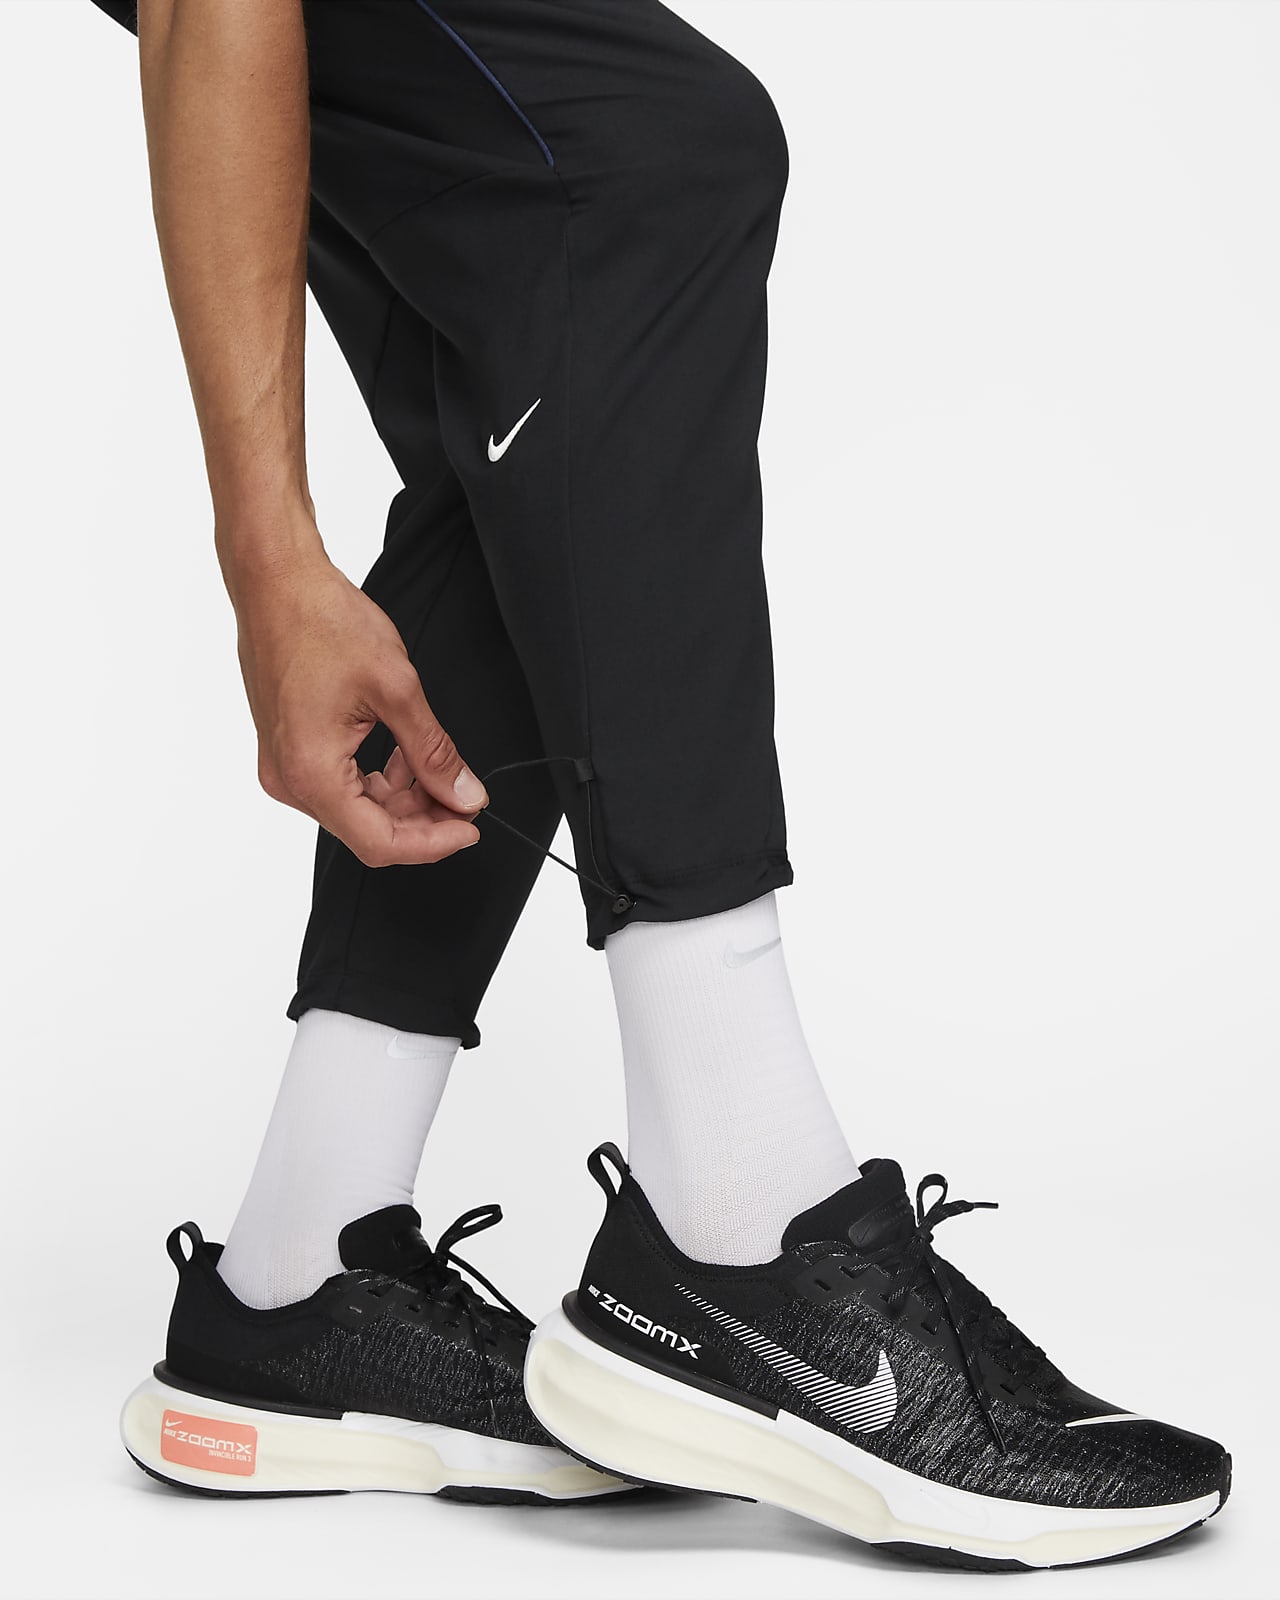 Nike Herren Lauftights Tech Tights, Black/Reflective Silver, S : Amazon.de:  Fashion